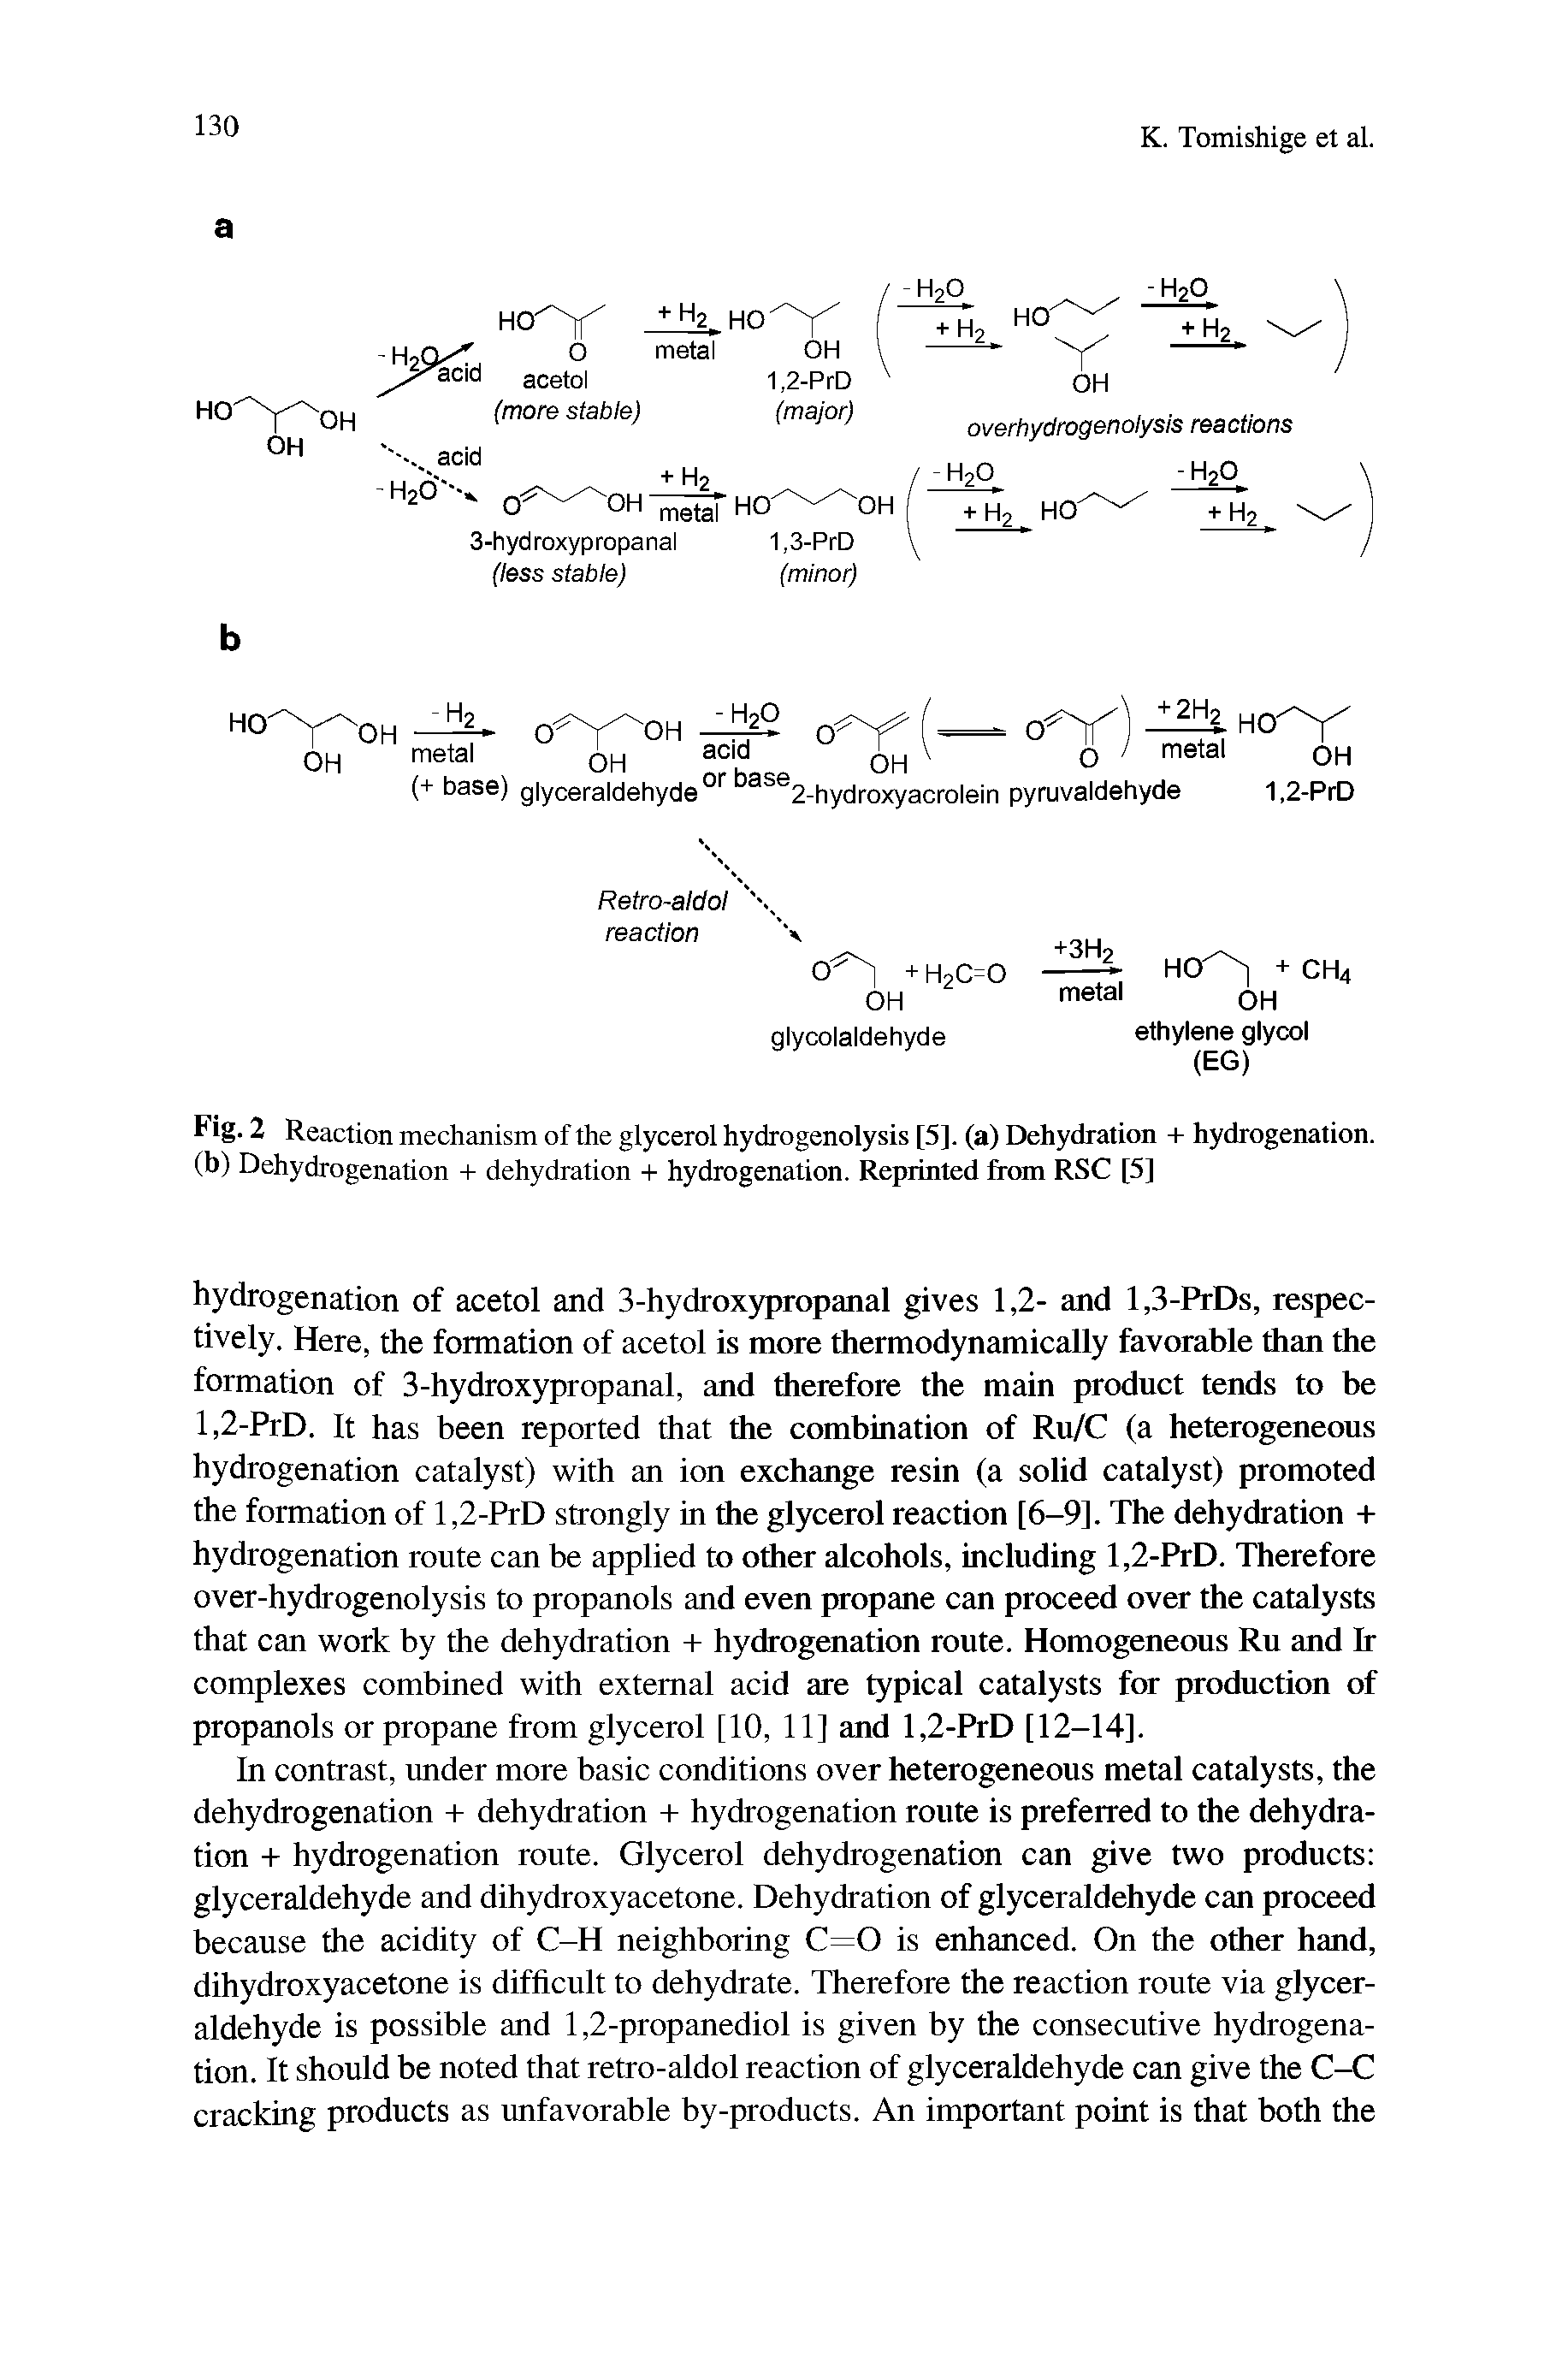 Fig. 2 Reaction mechanism of the glycerol hydrogenolysis [5]. (a) Dehydration + hydrogenation, (b) Dehydrogenation + dehydration + hydrogenation. Reprinted from RSC [5]...